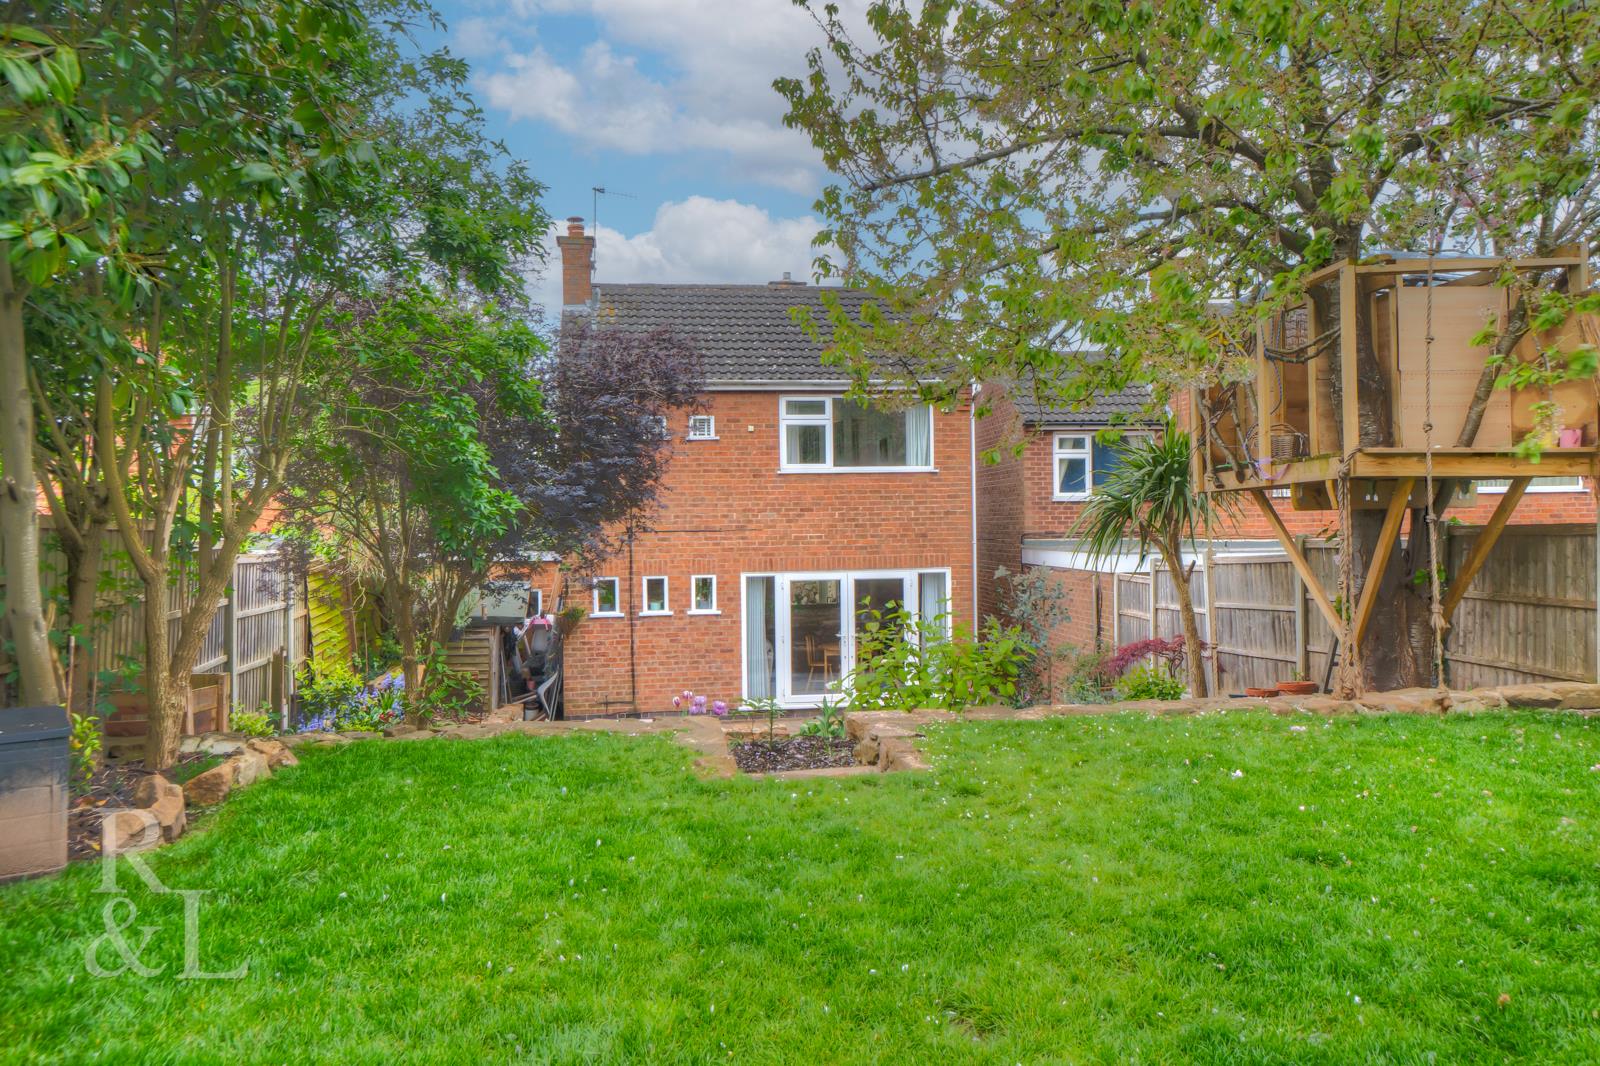 Property image for Boxley Drive, West Bridgford, Nottingham